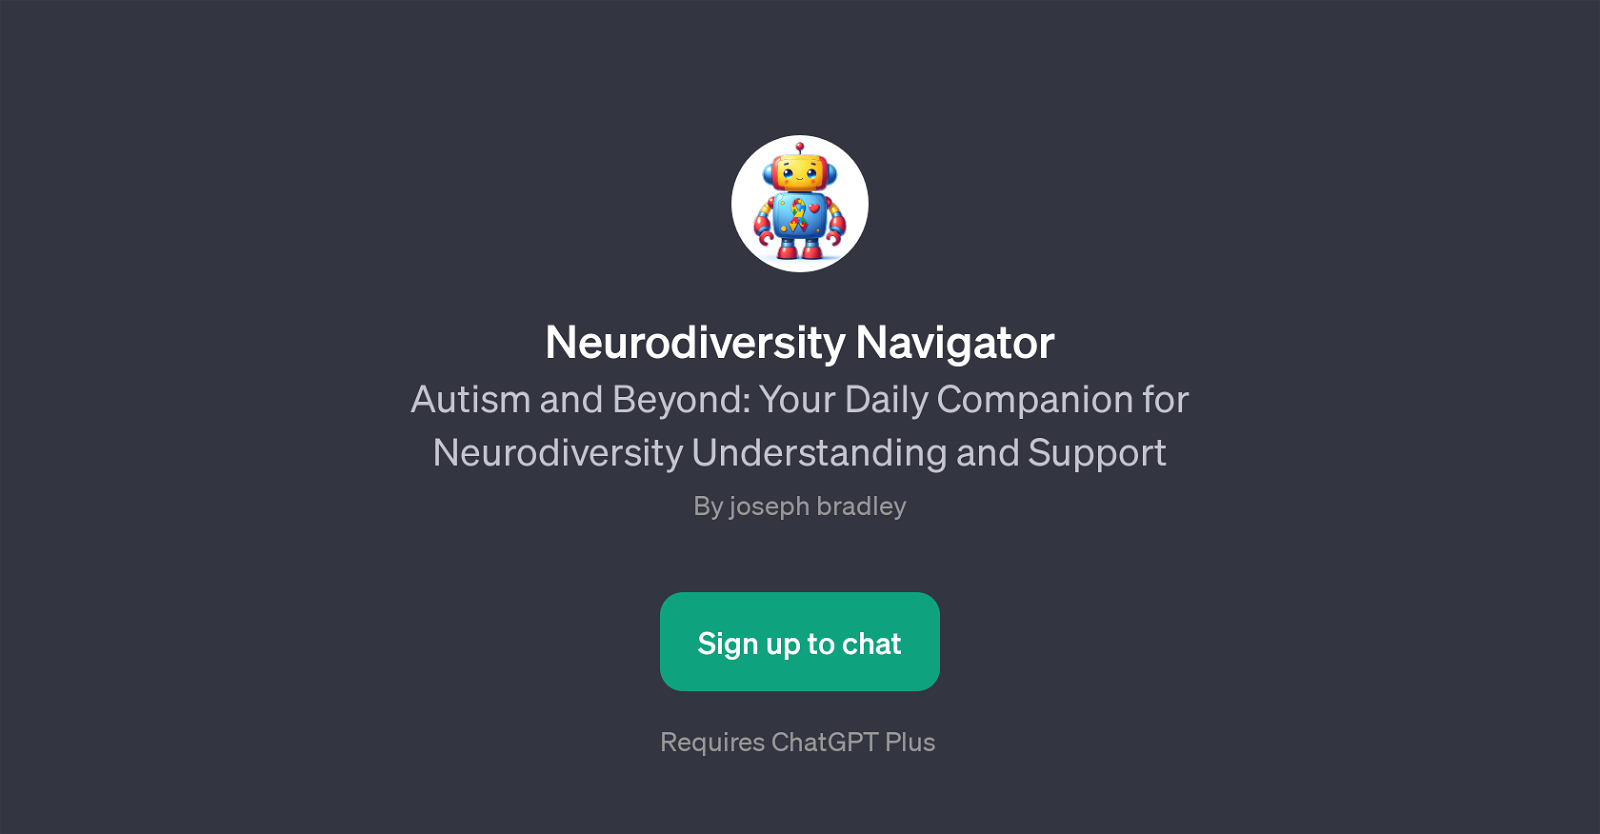 Neurodiversity Navigator website